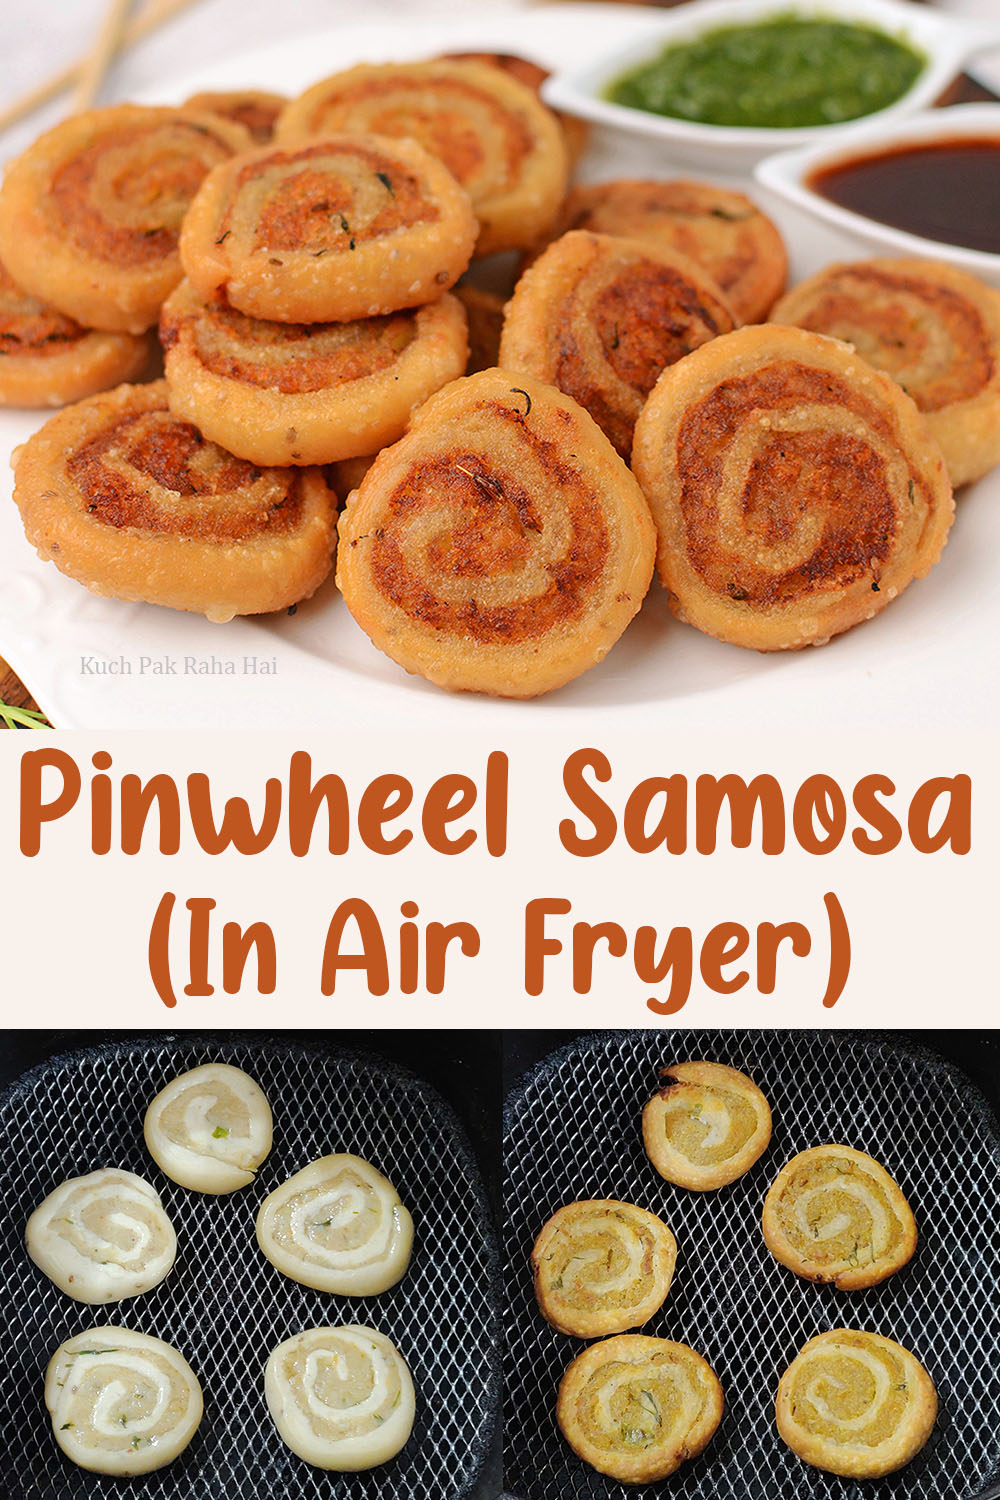 Pinwheel Samosa in air fryer recipe